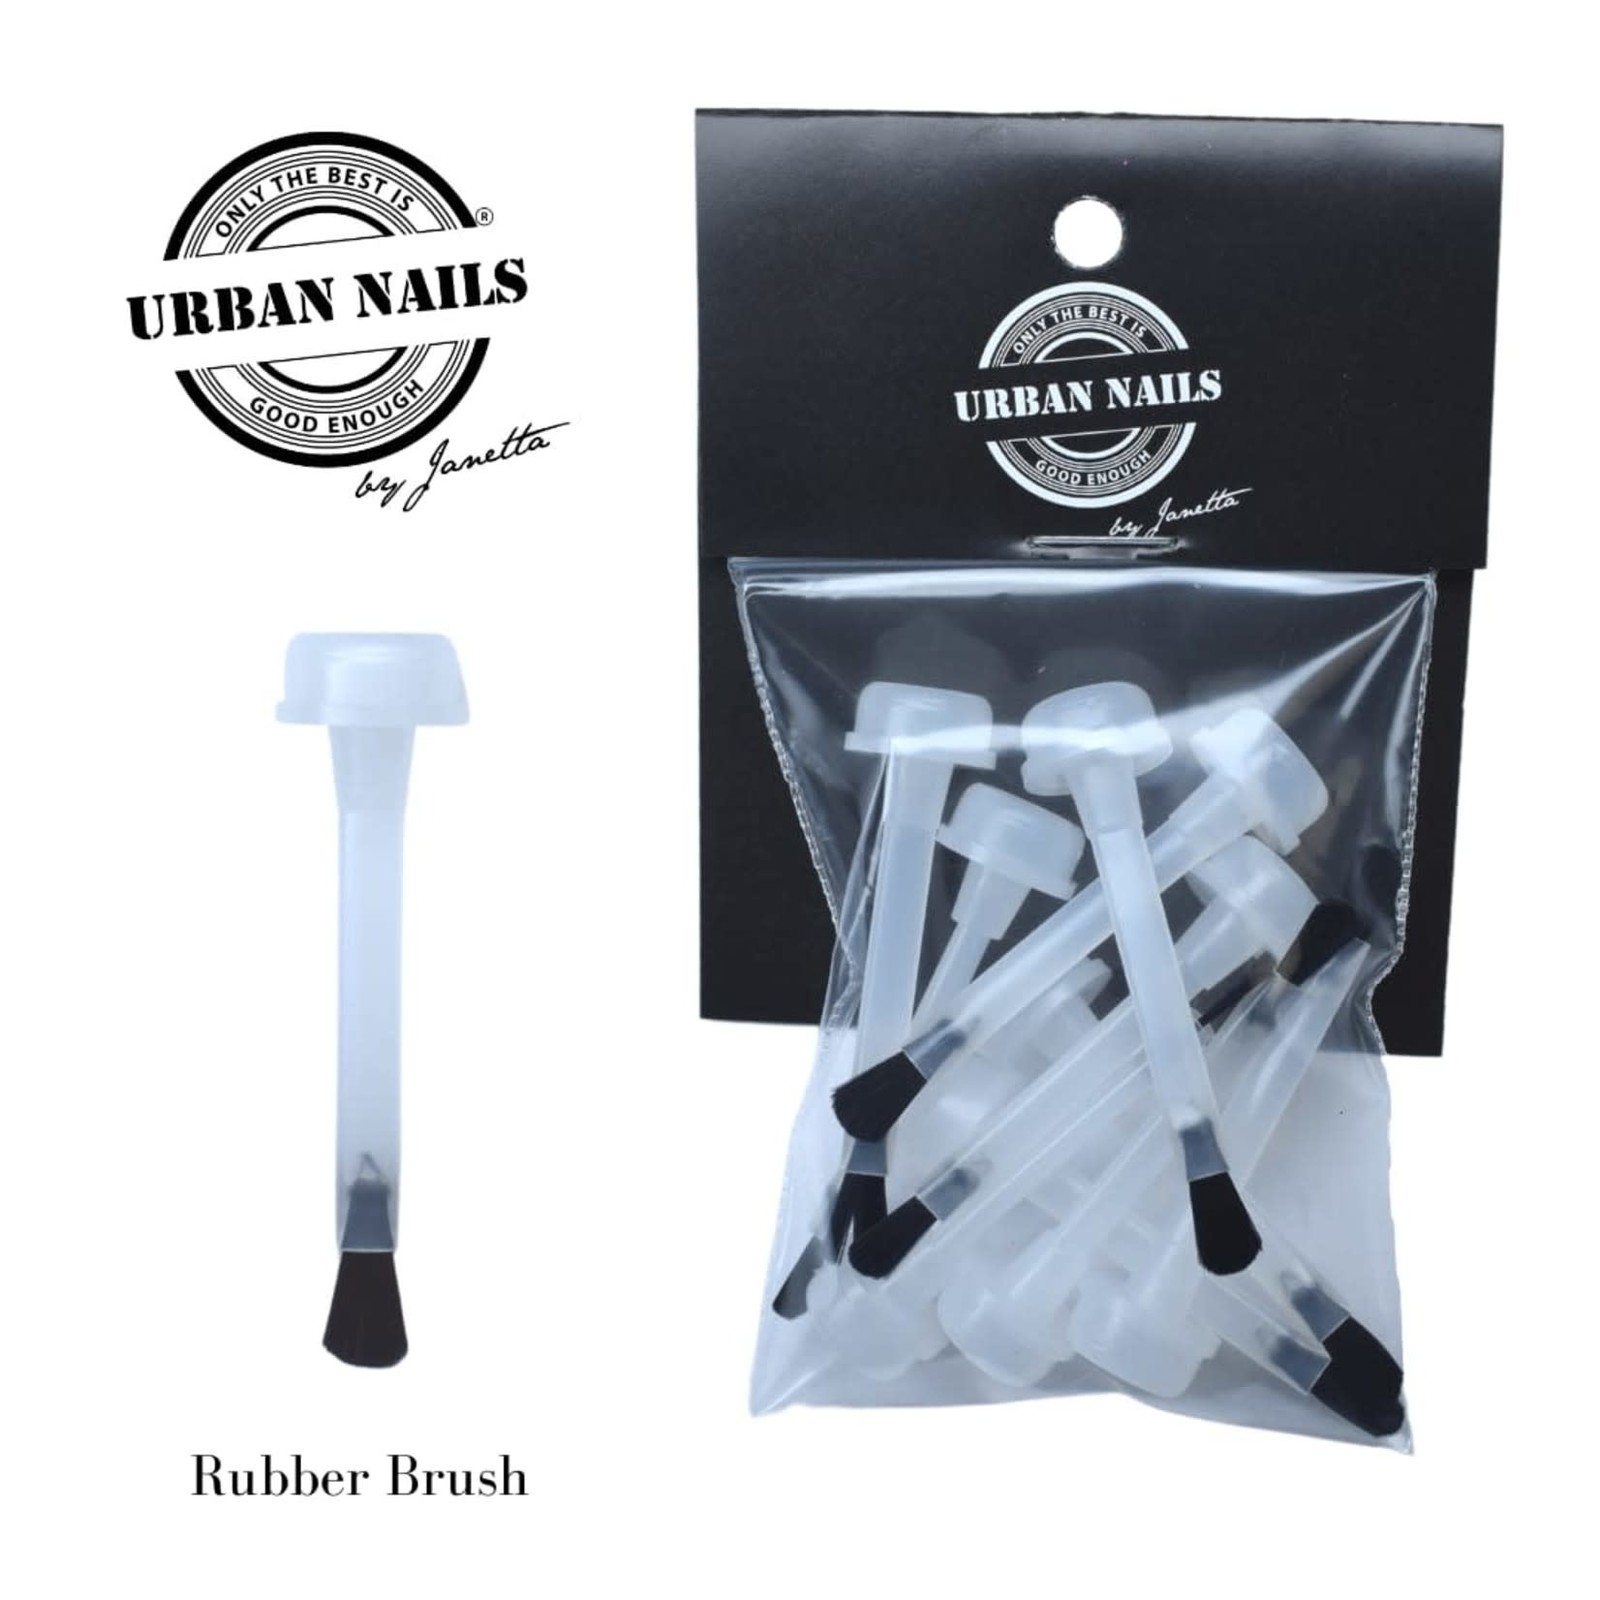 Urban nails Rubber brush 10 stuks